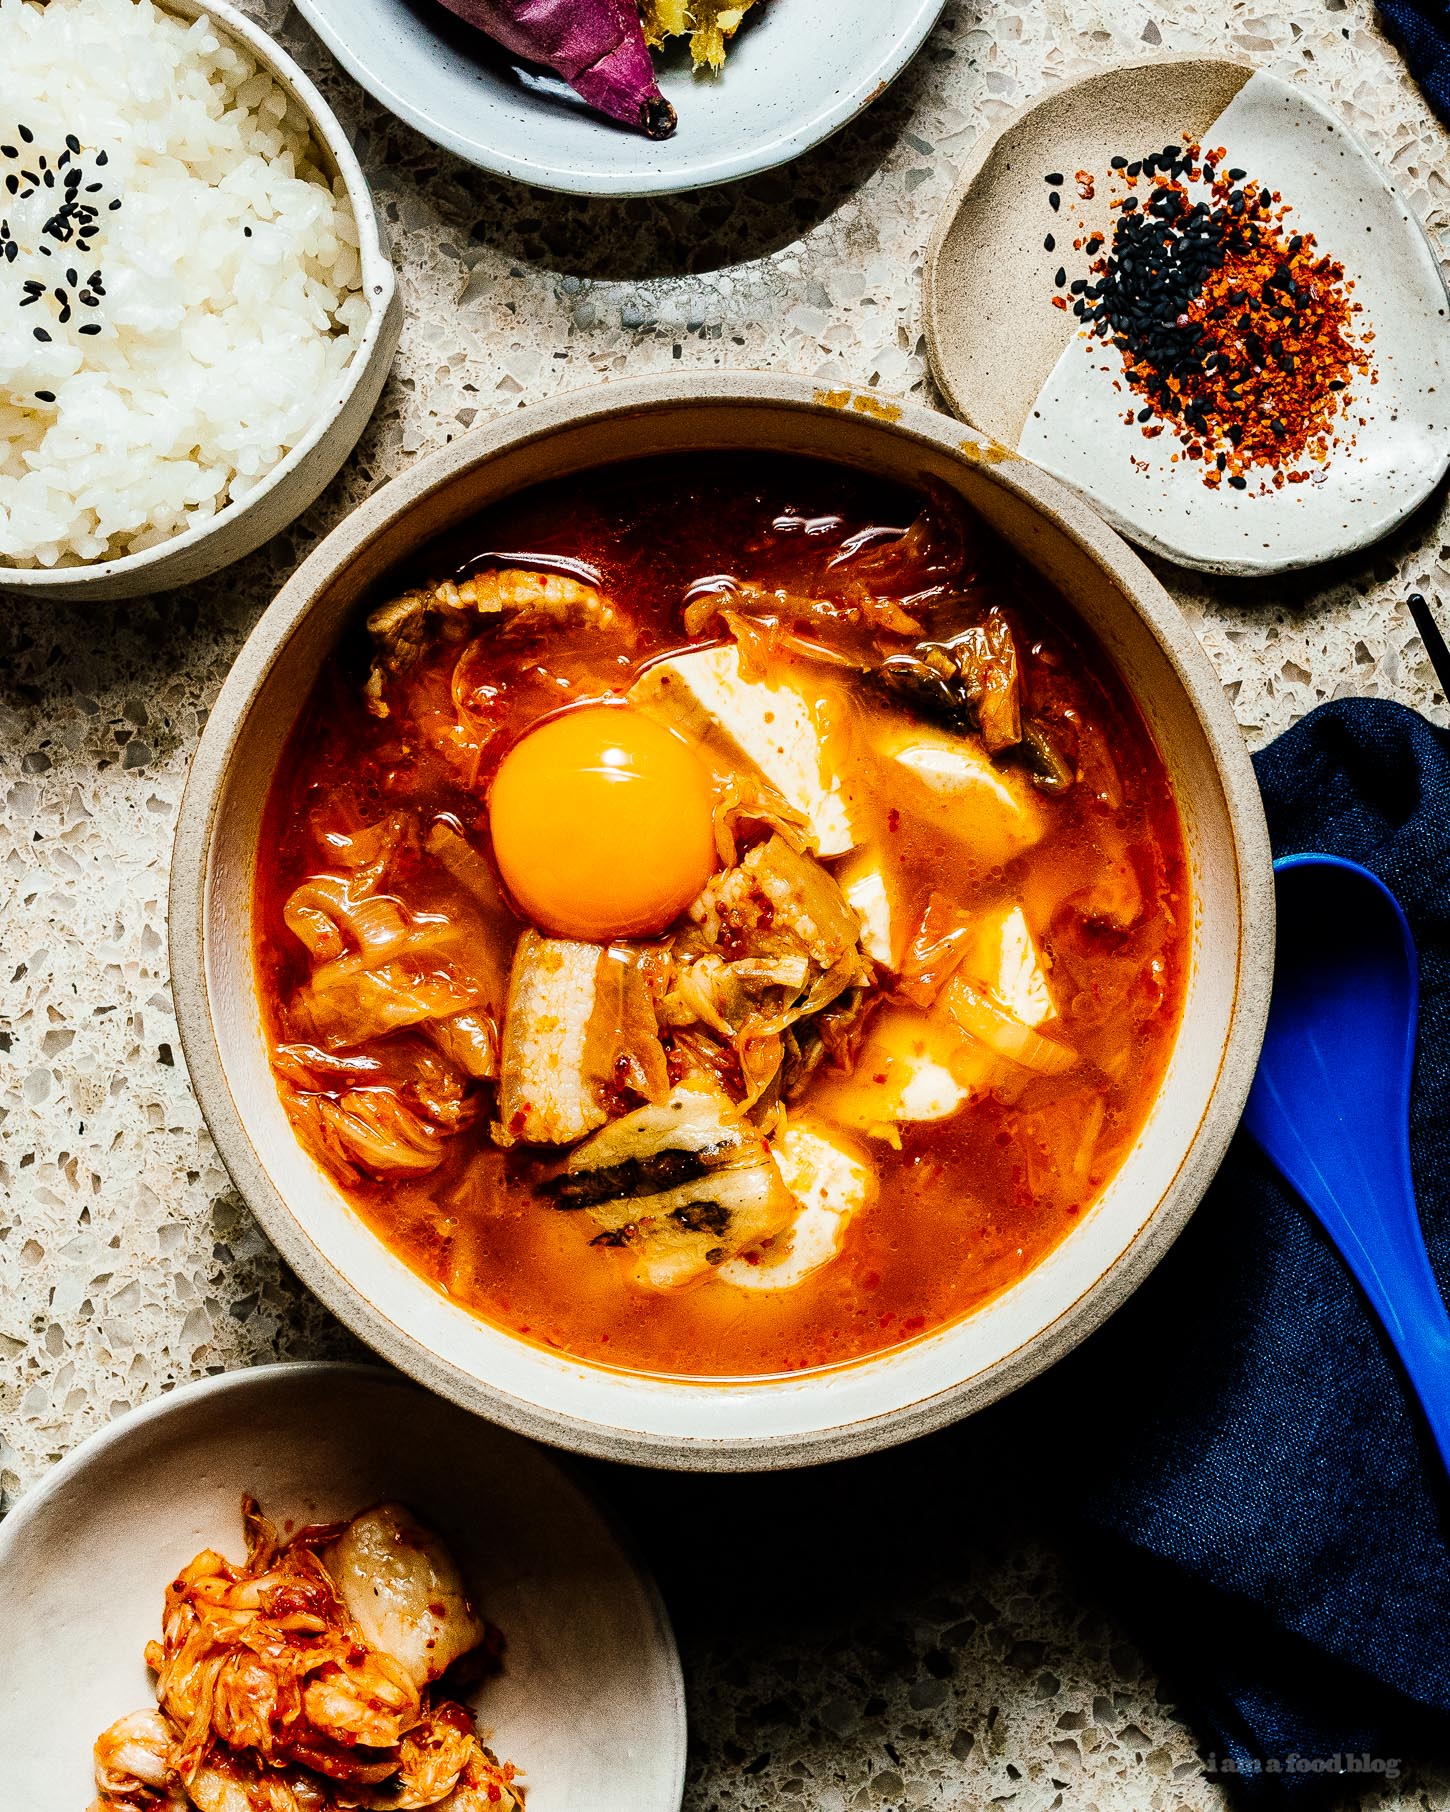 Sundubu jjigae cálido y confortable / estofado de kimchi picante tofu suave #kimch #tofu #korean #recipes #dinner #soup #stew #tofustew #tofusoub